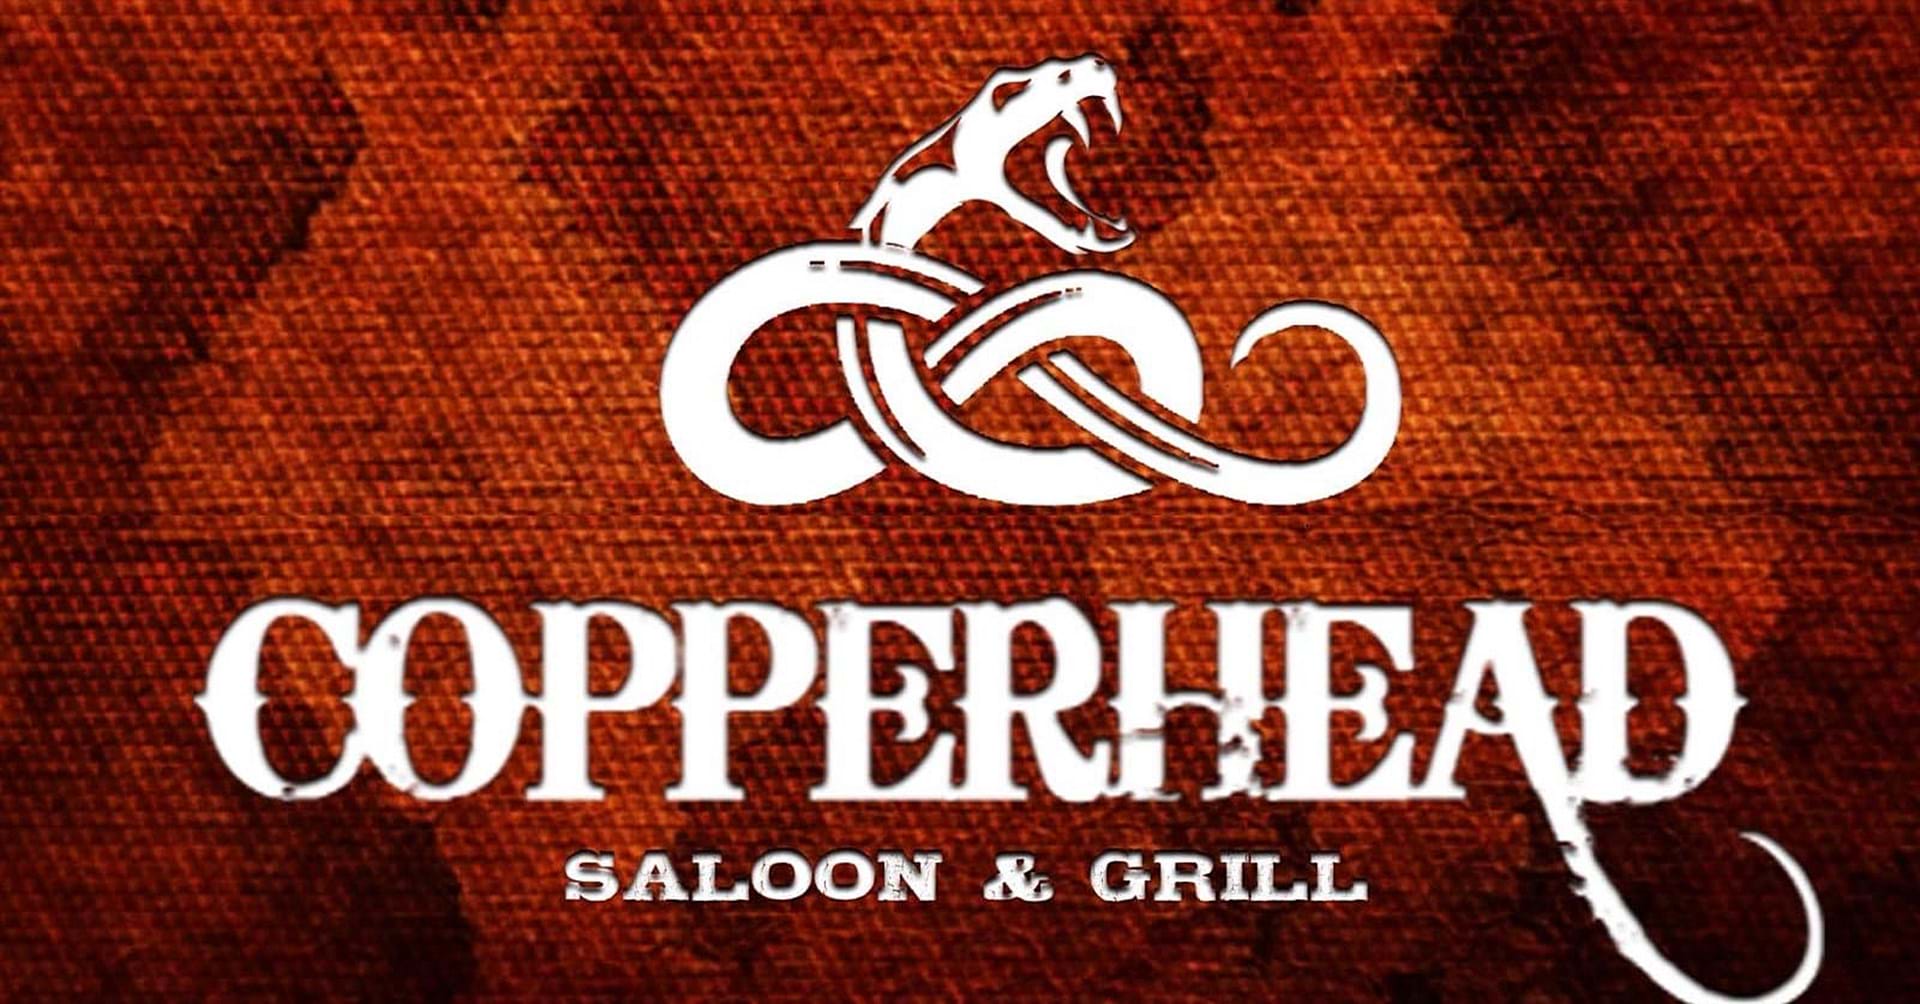 Copperhead Saloon & Grill logo